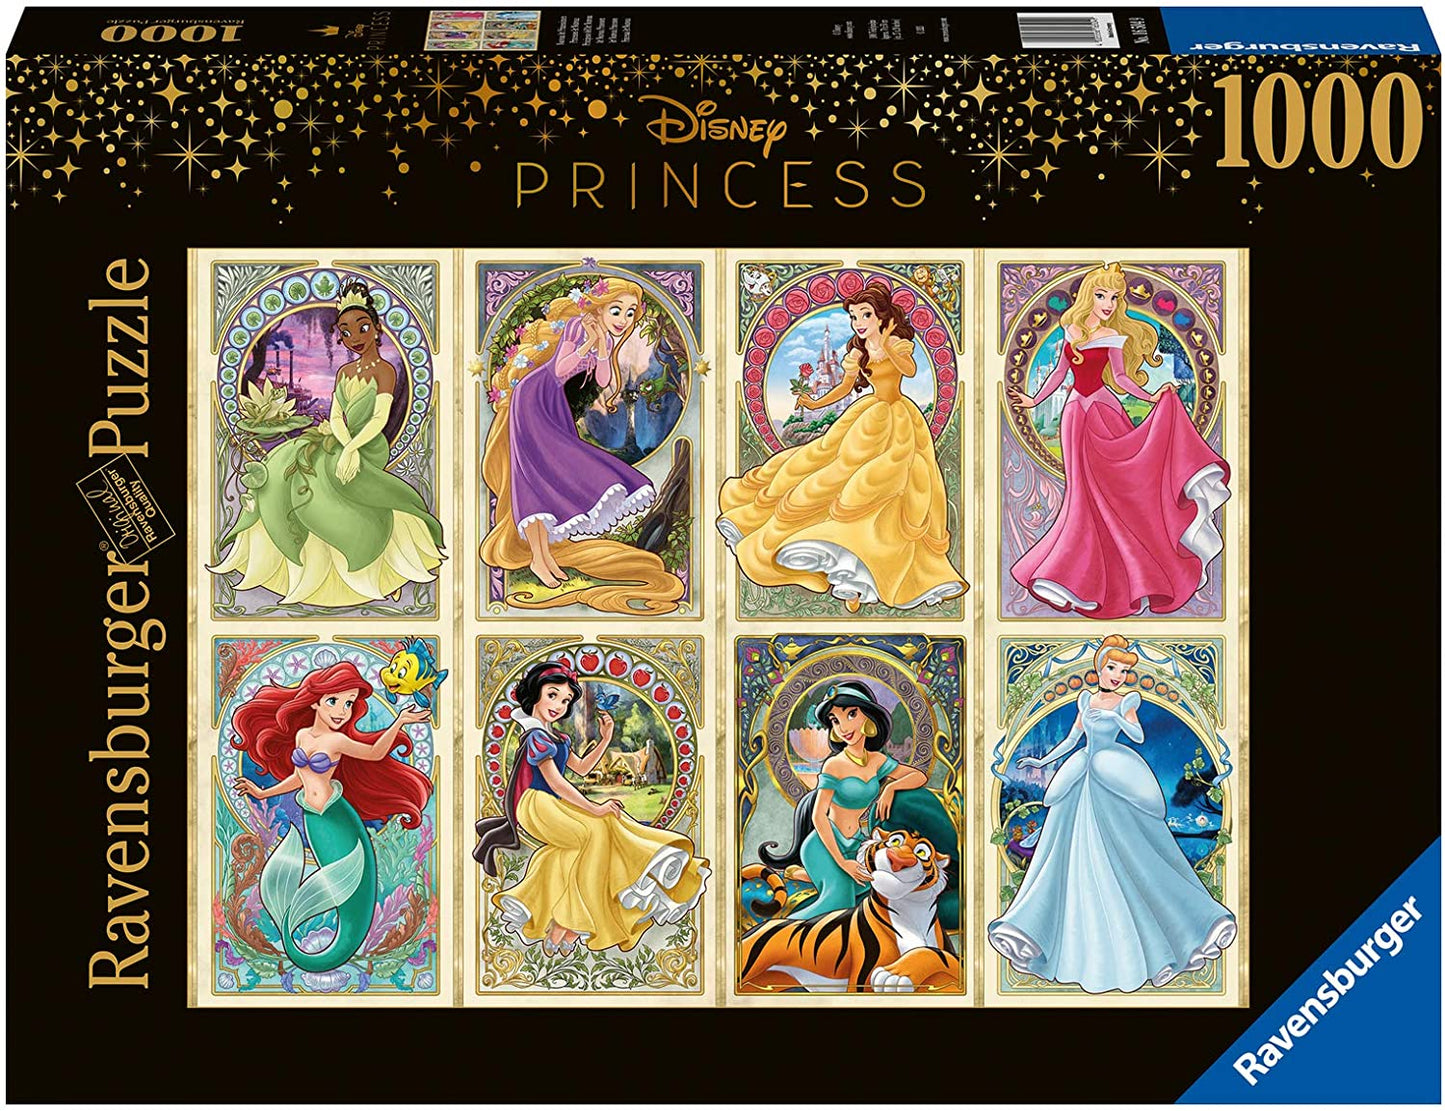 Disney Princess van Disney, puzzel van 1000 stukjes